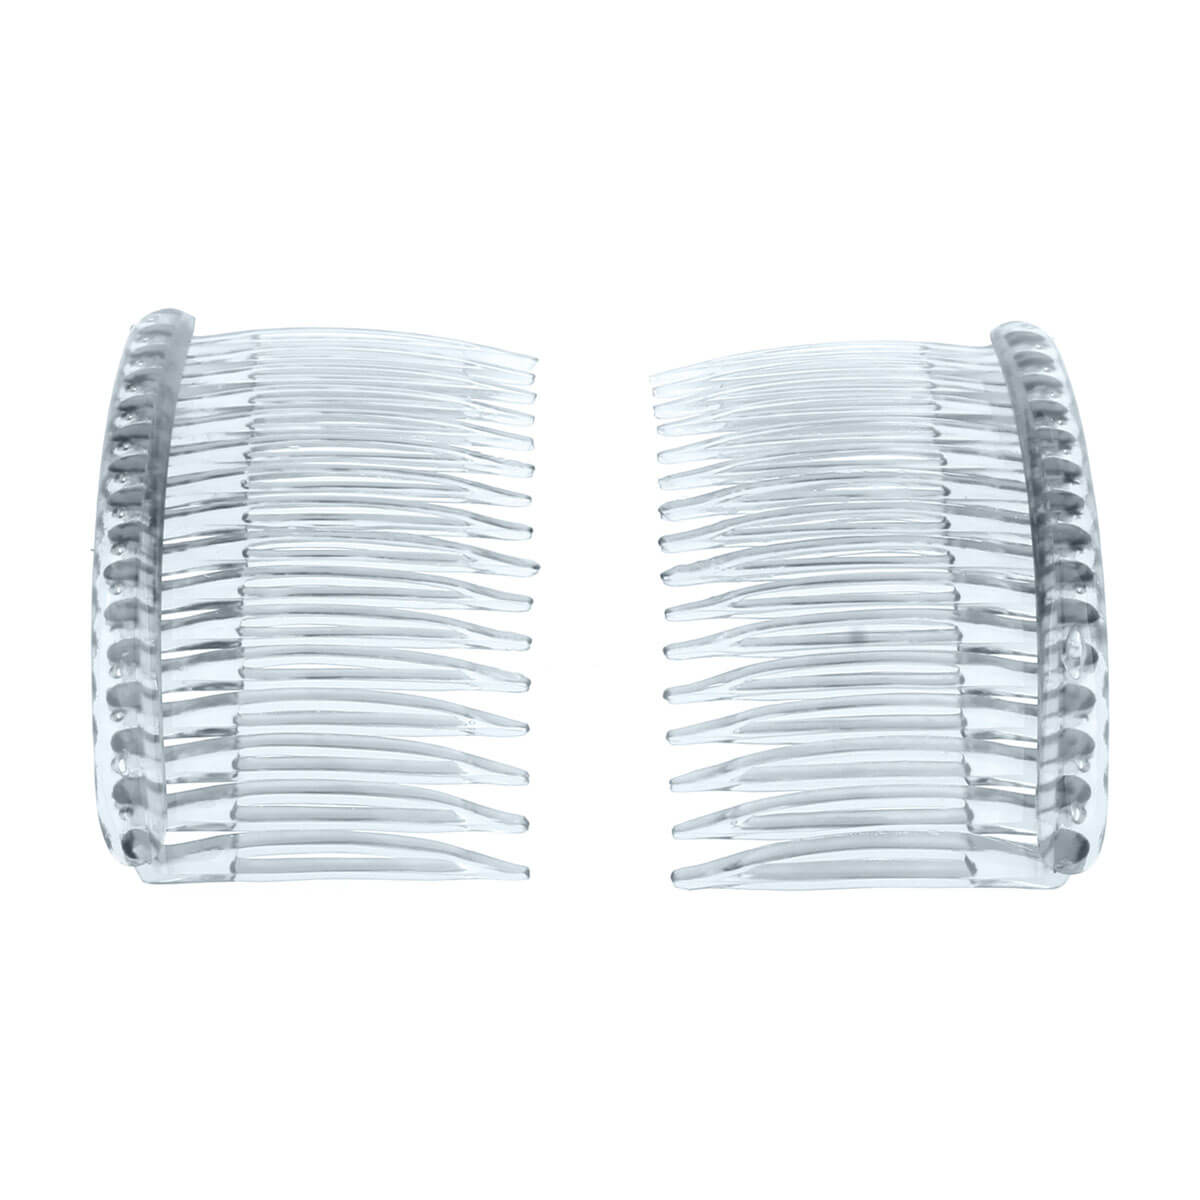 Plastic side comb 2pcs (8cm x 4.7cm)